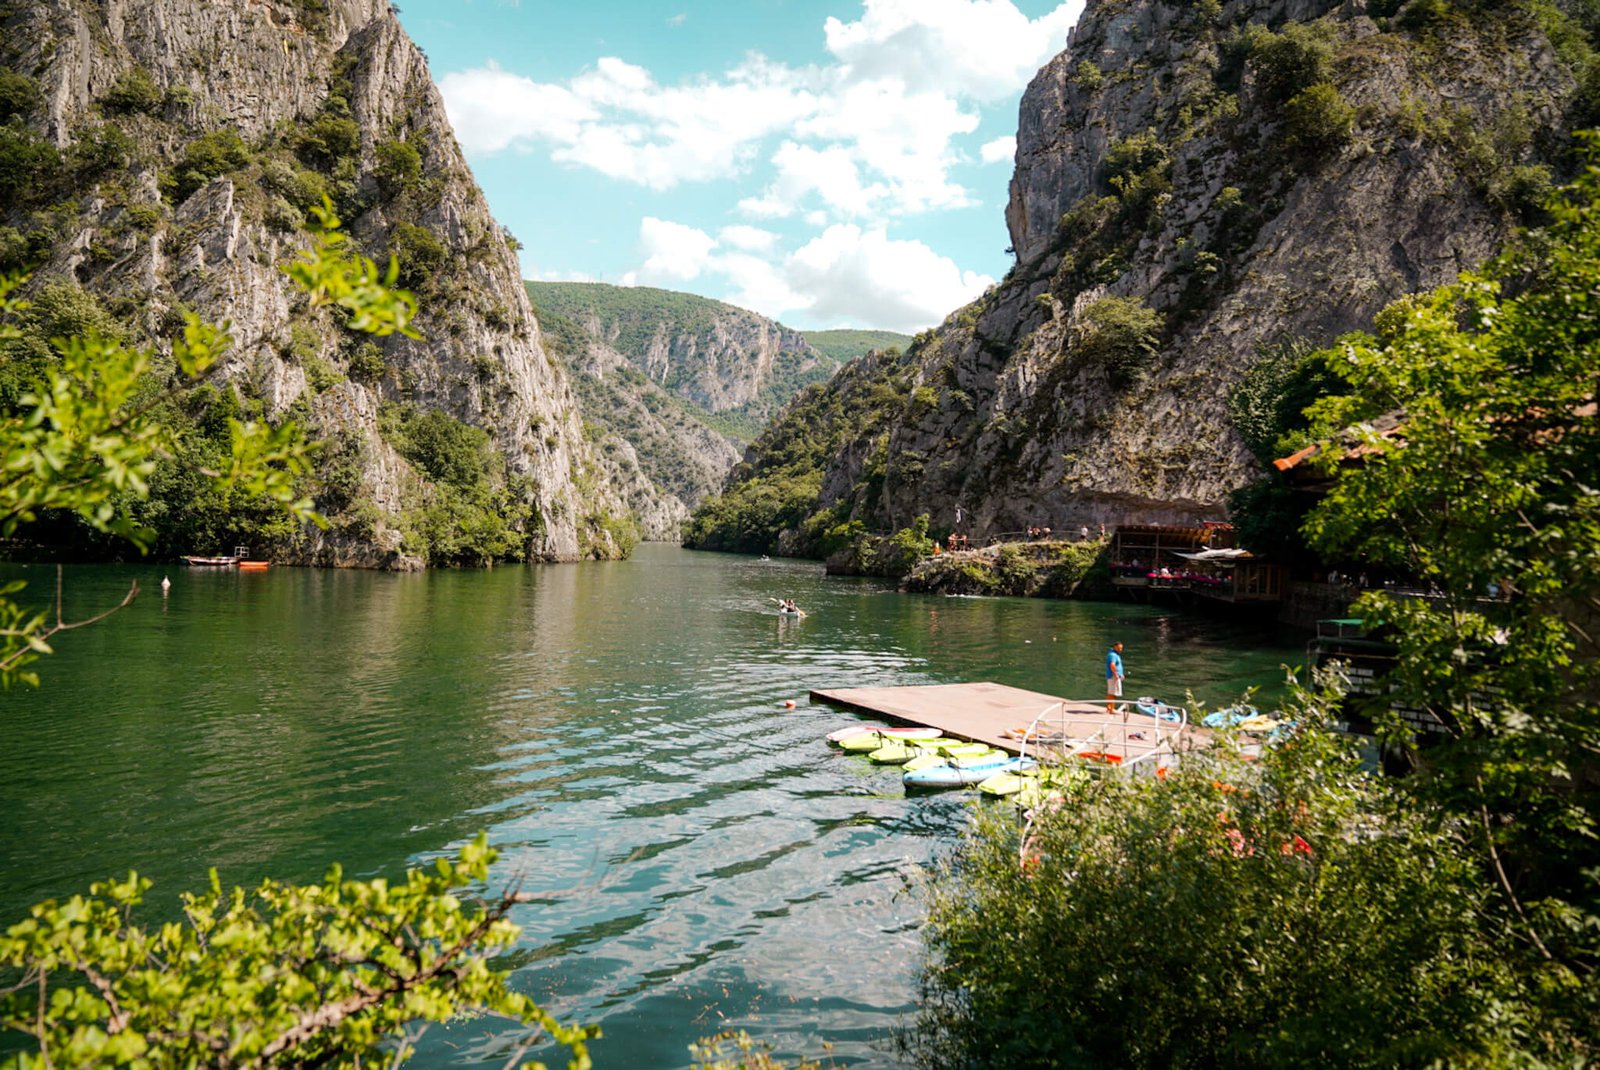 Matka Canyon, day trip from Skopje in Macedonia